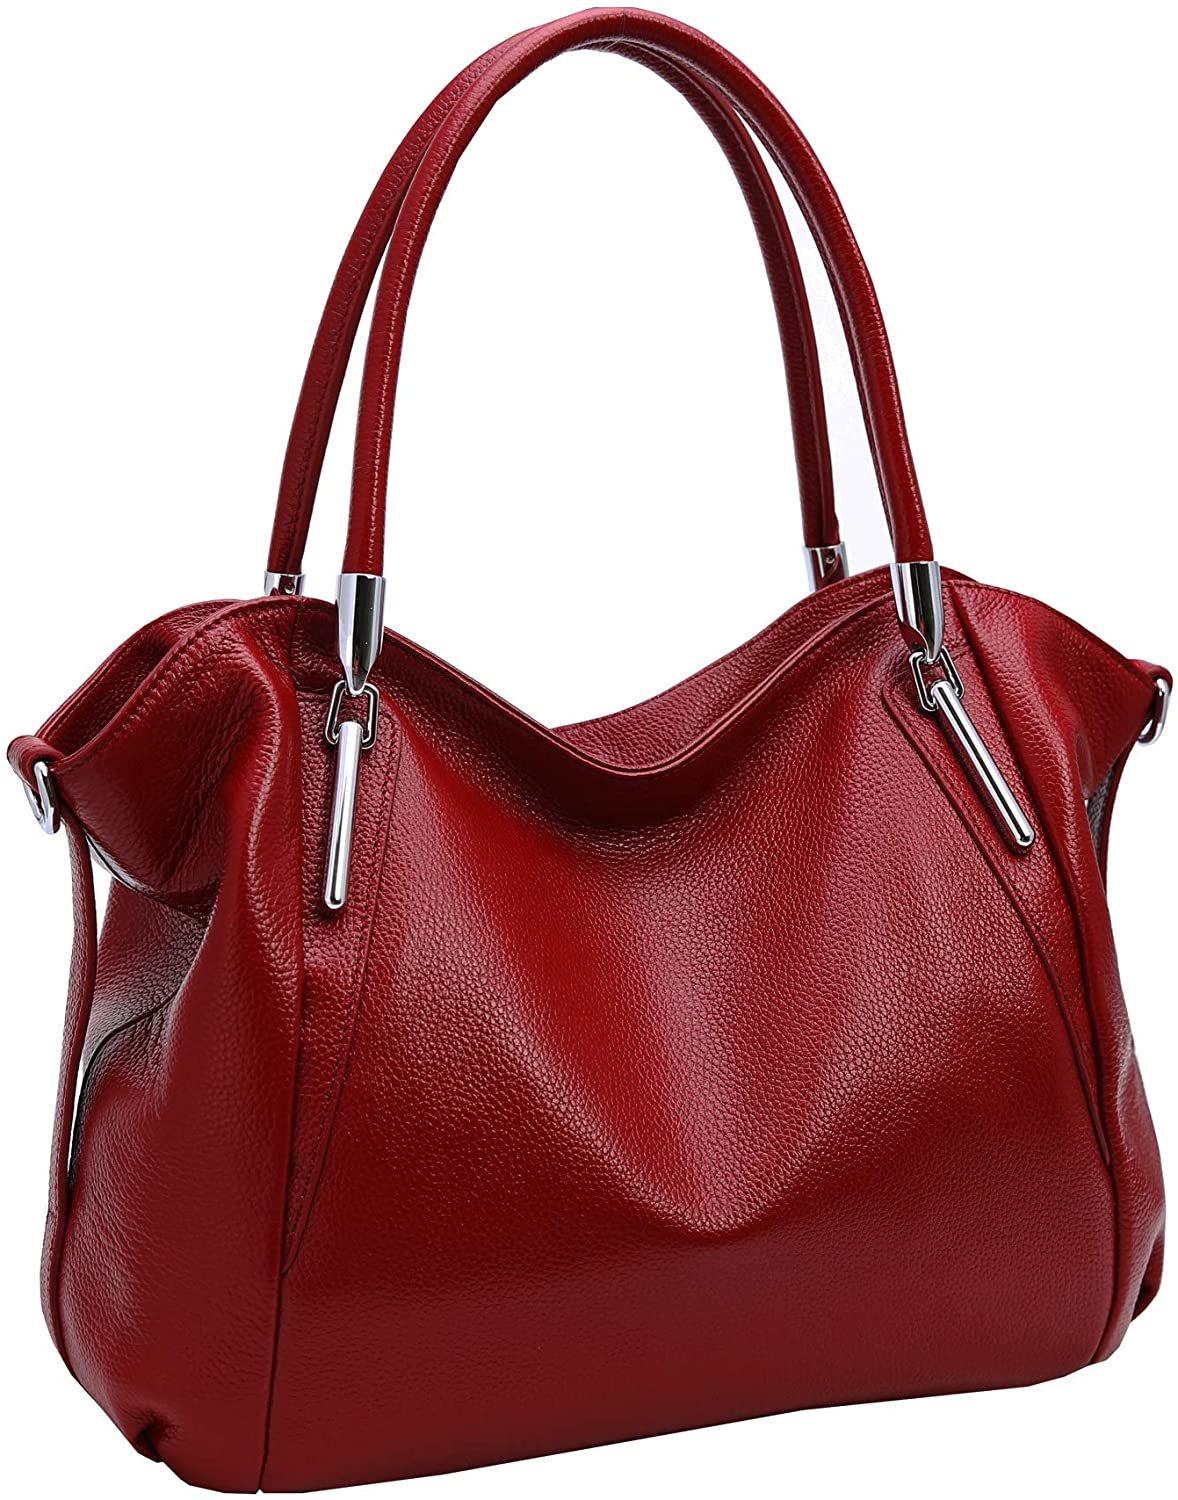 Heshe Women’s Genuine Leather Purse and Handbags Tote Top Handle Bags Crossbody Bag Hobo Purses Designer Satchel for Ladies 